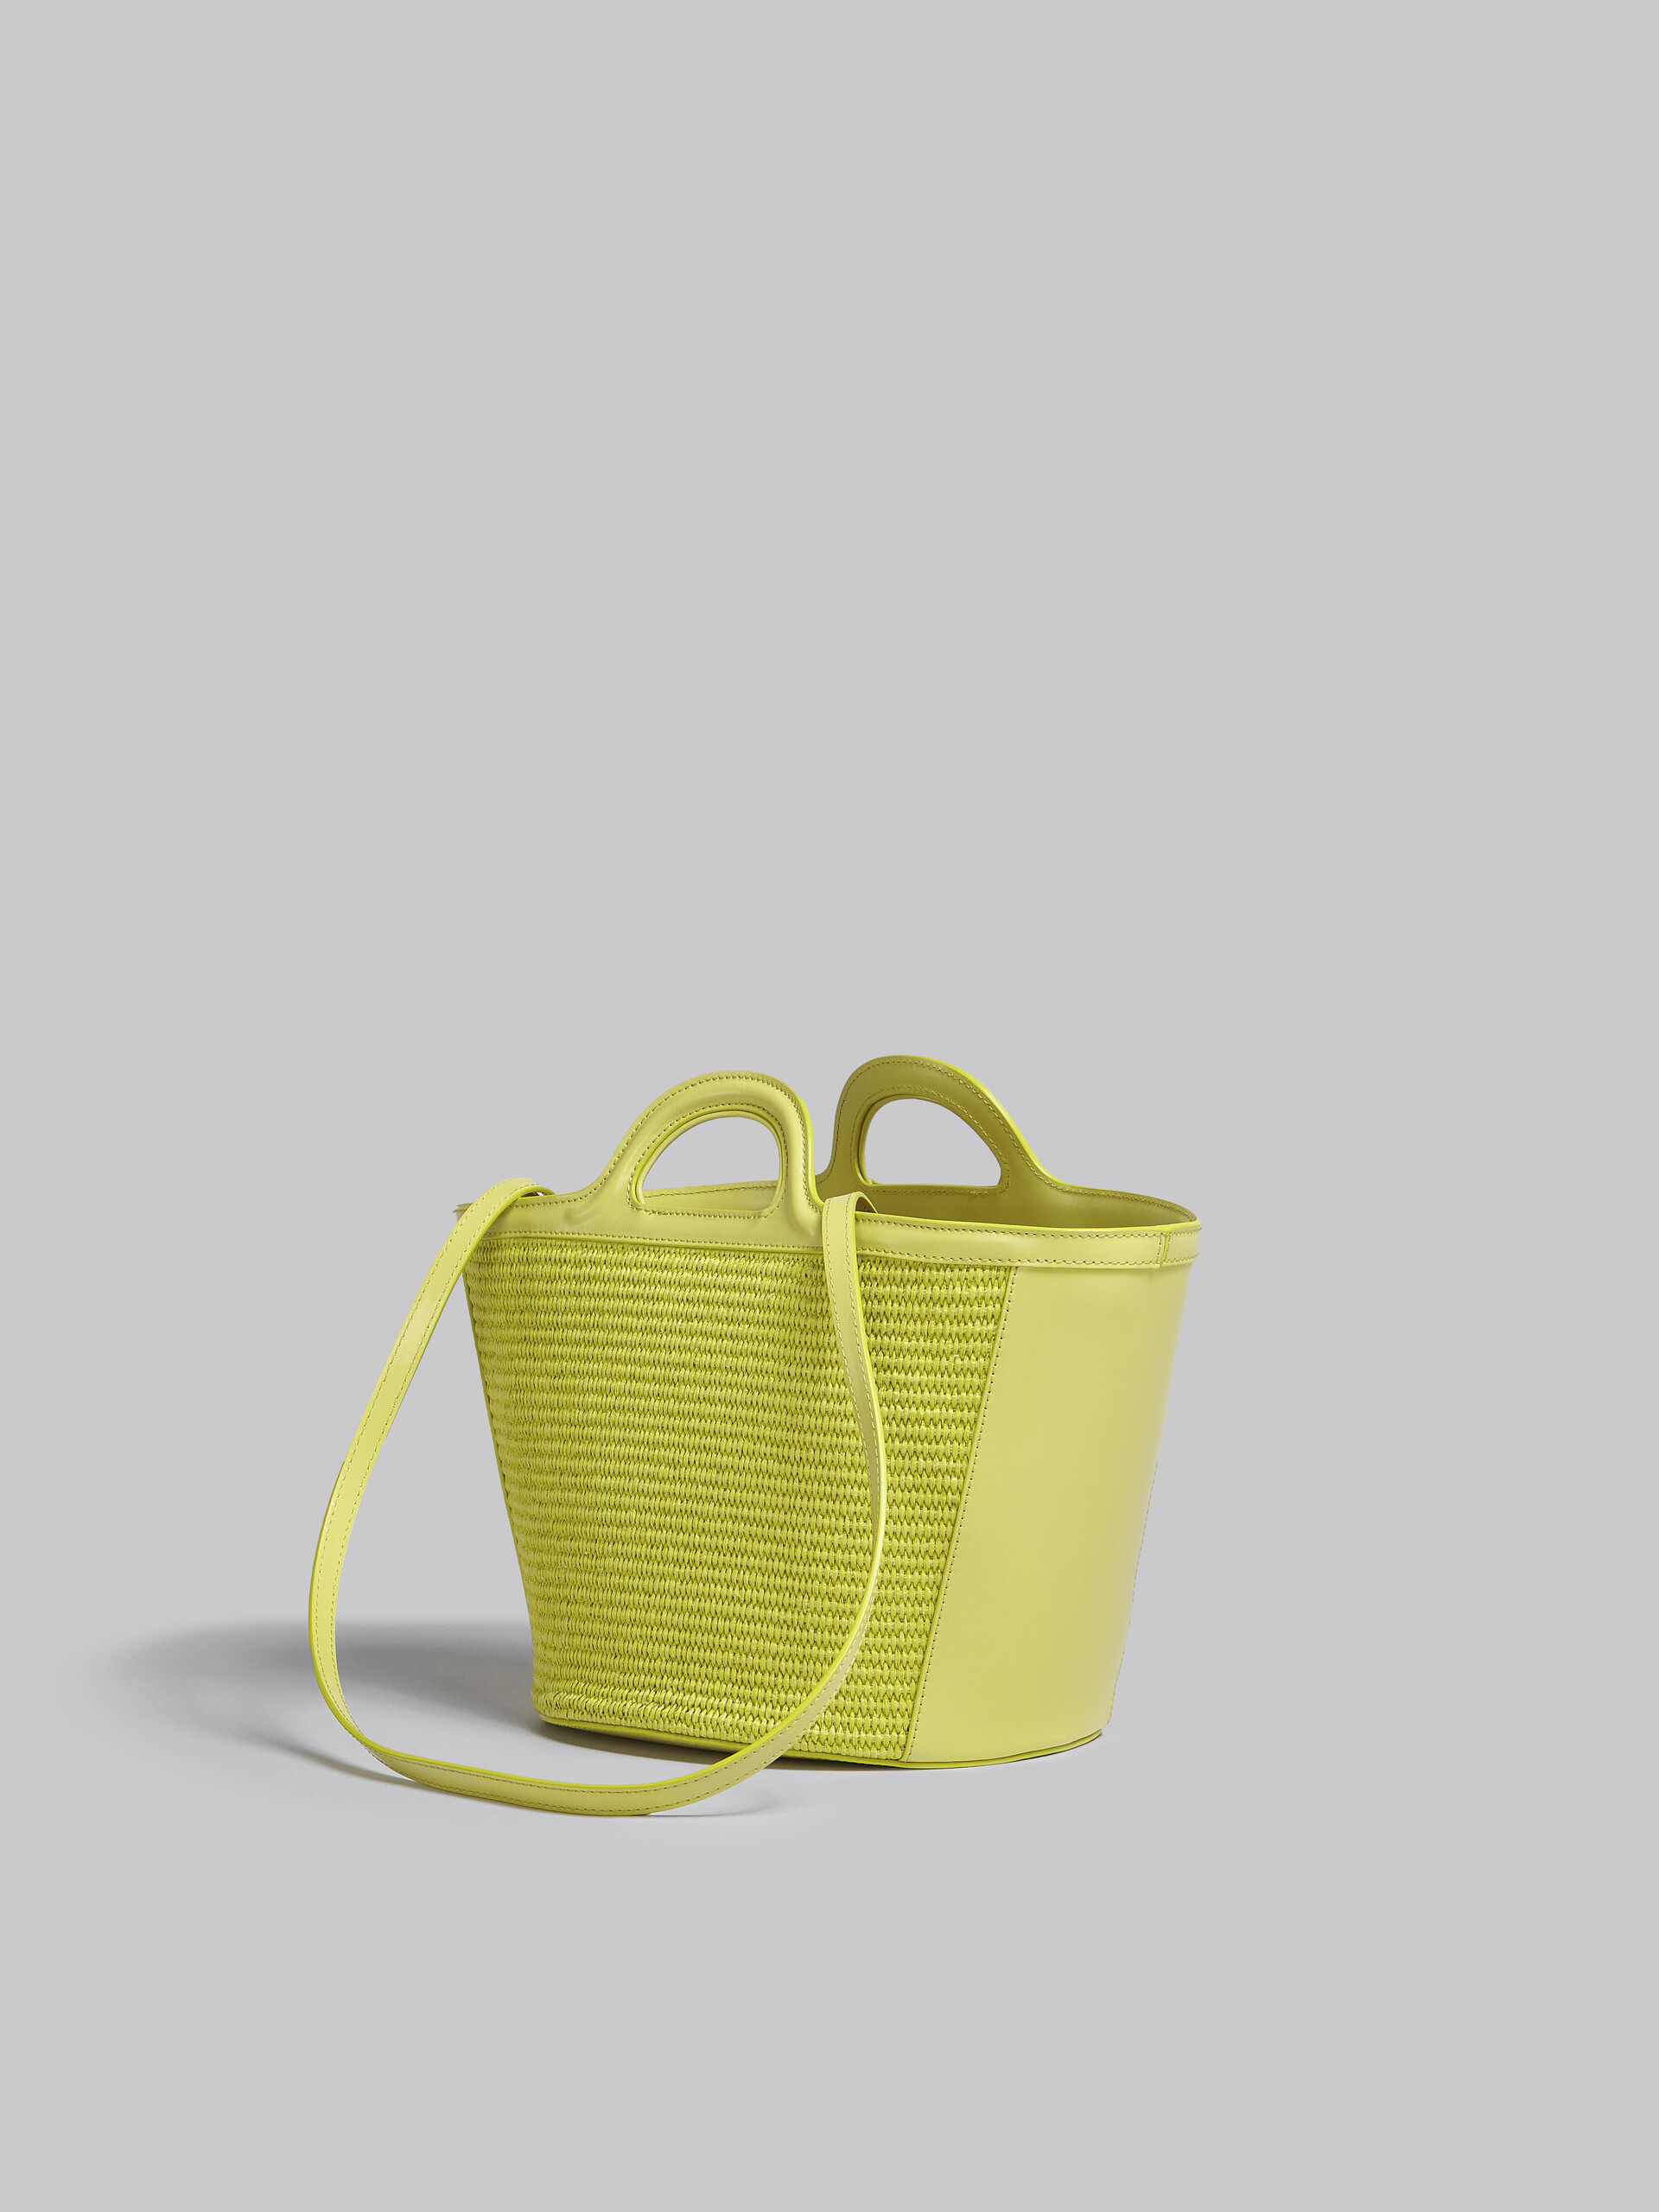 TROPICALIA small bag in yellow leather and raffia - Handbags - Image 3